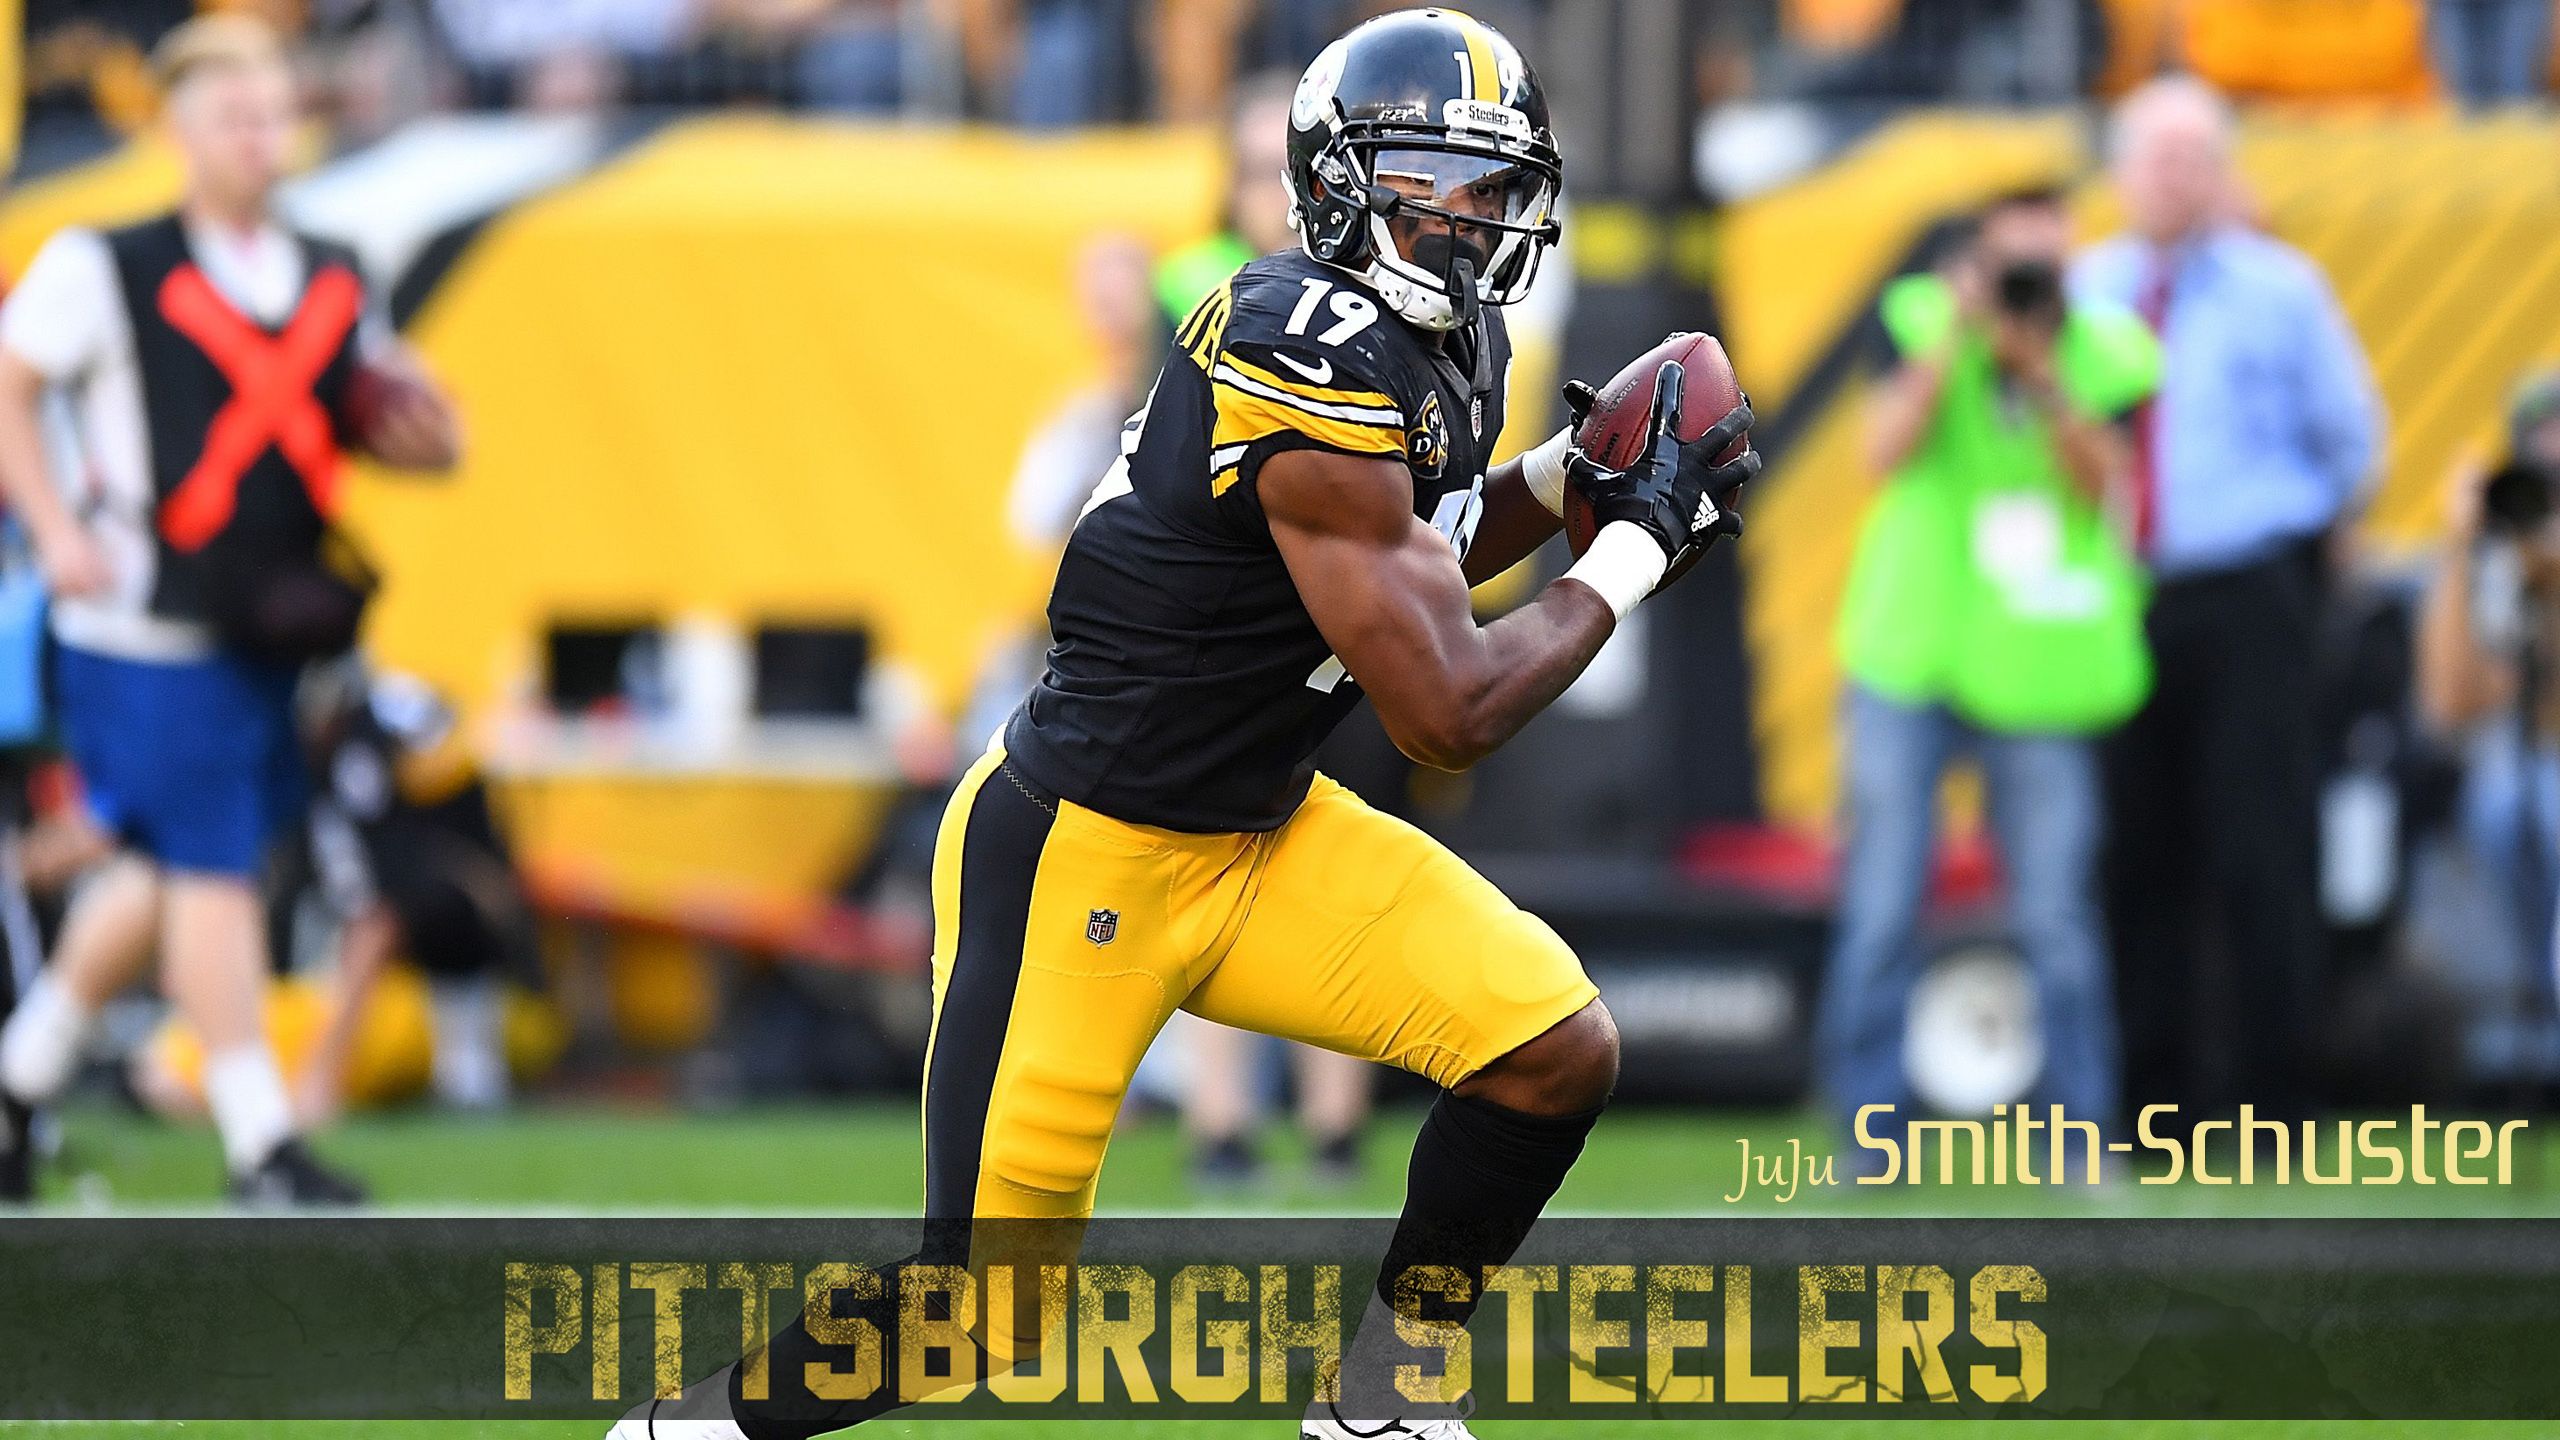 Pittsburgh Steelers Player Wallpaper Smith Schuster 4k HD Wallpaper